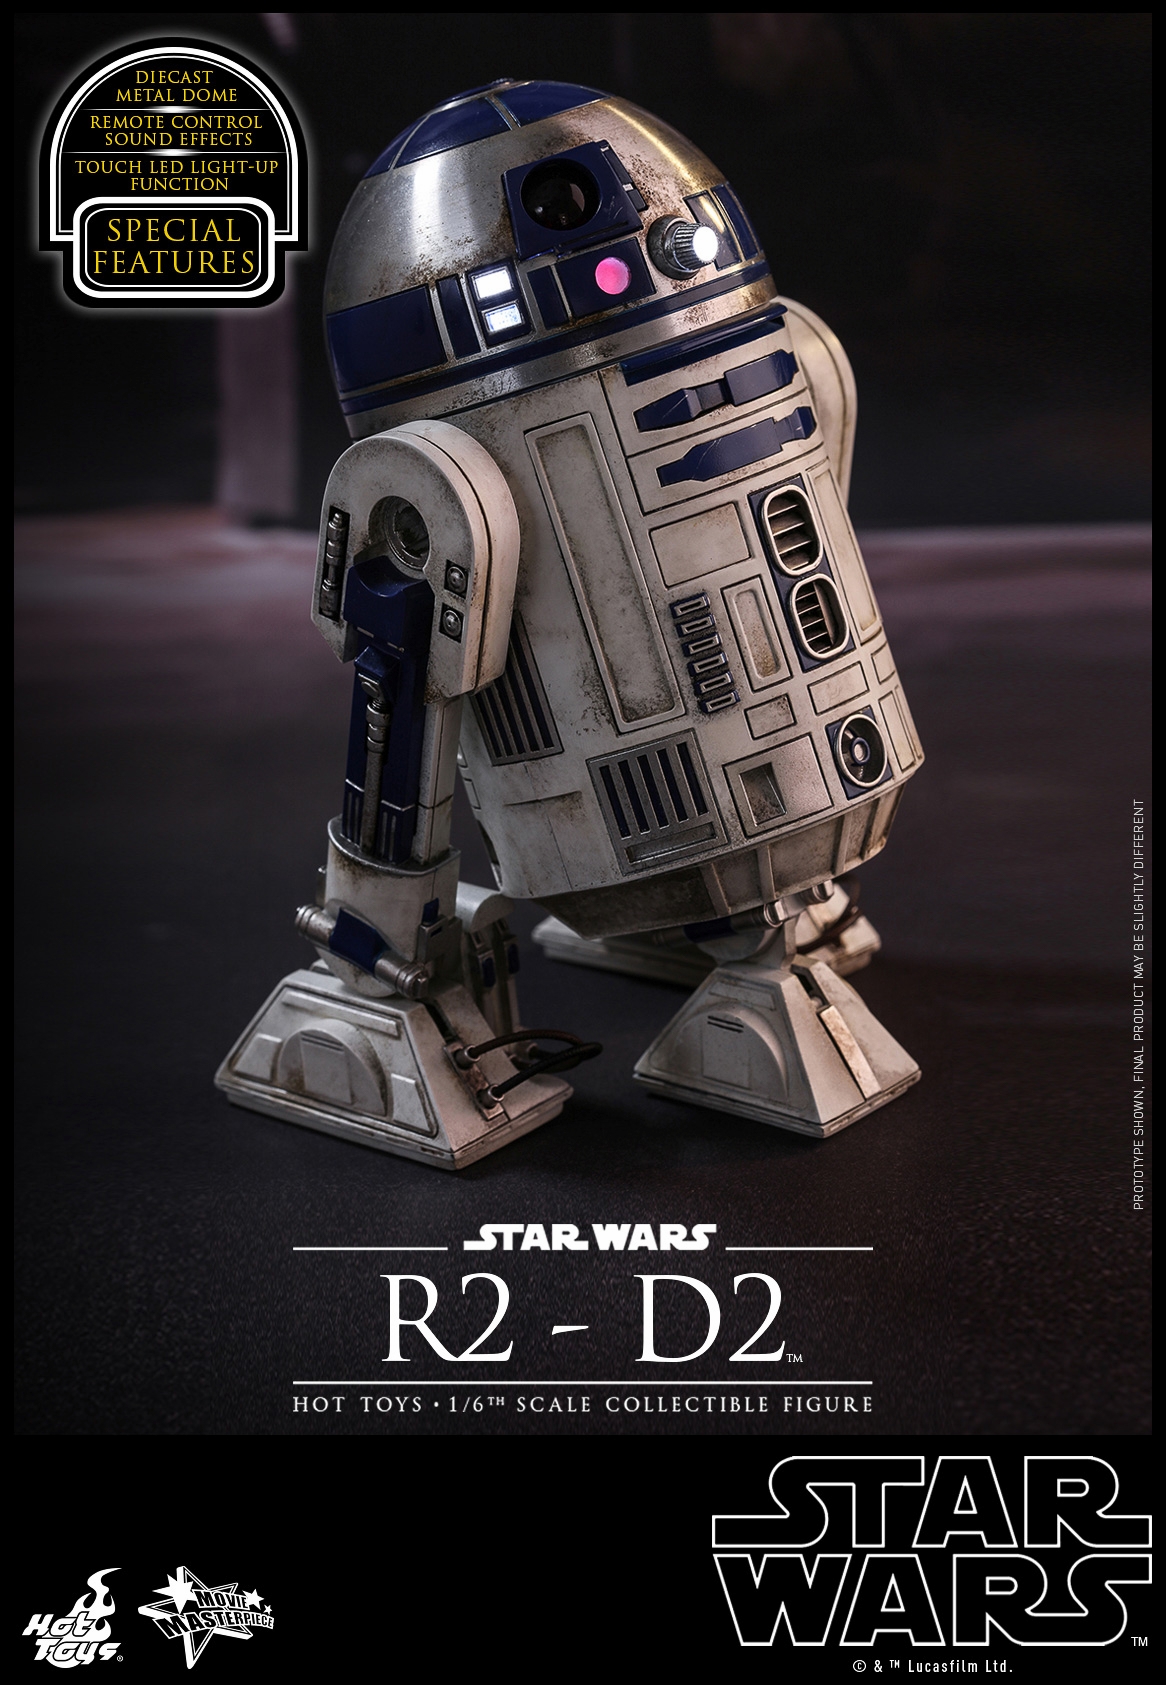 Hot-Toys-MMS408-Star-Wars-The-Force-Awakens-R2-D2-004.jpg